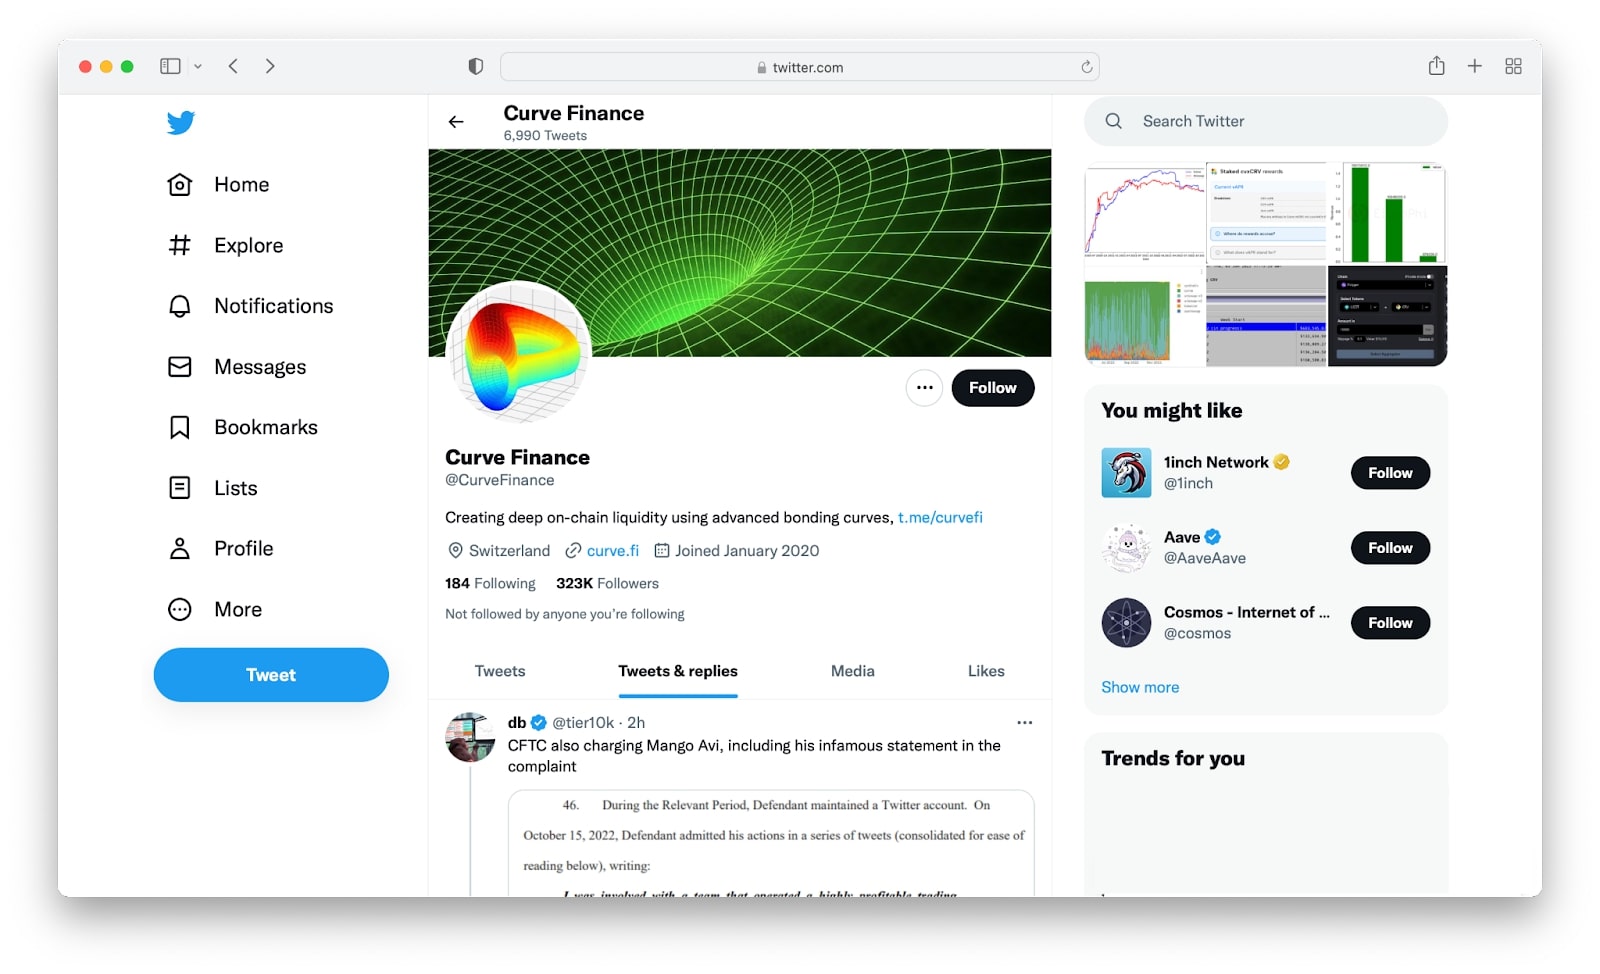 Curve Finance’s Twitter Profile